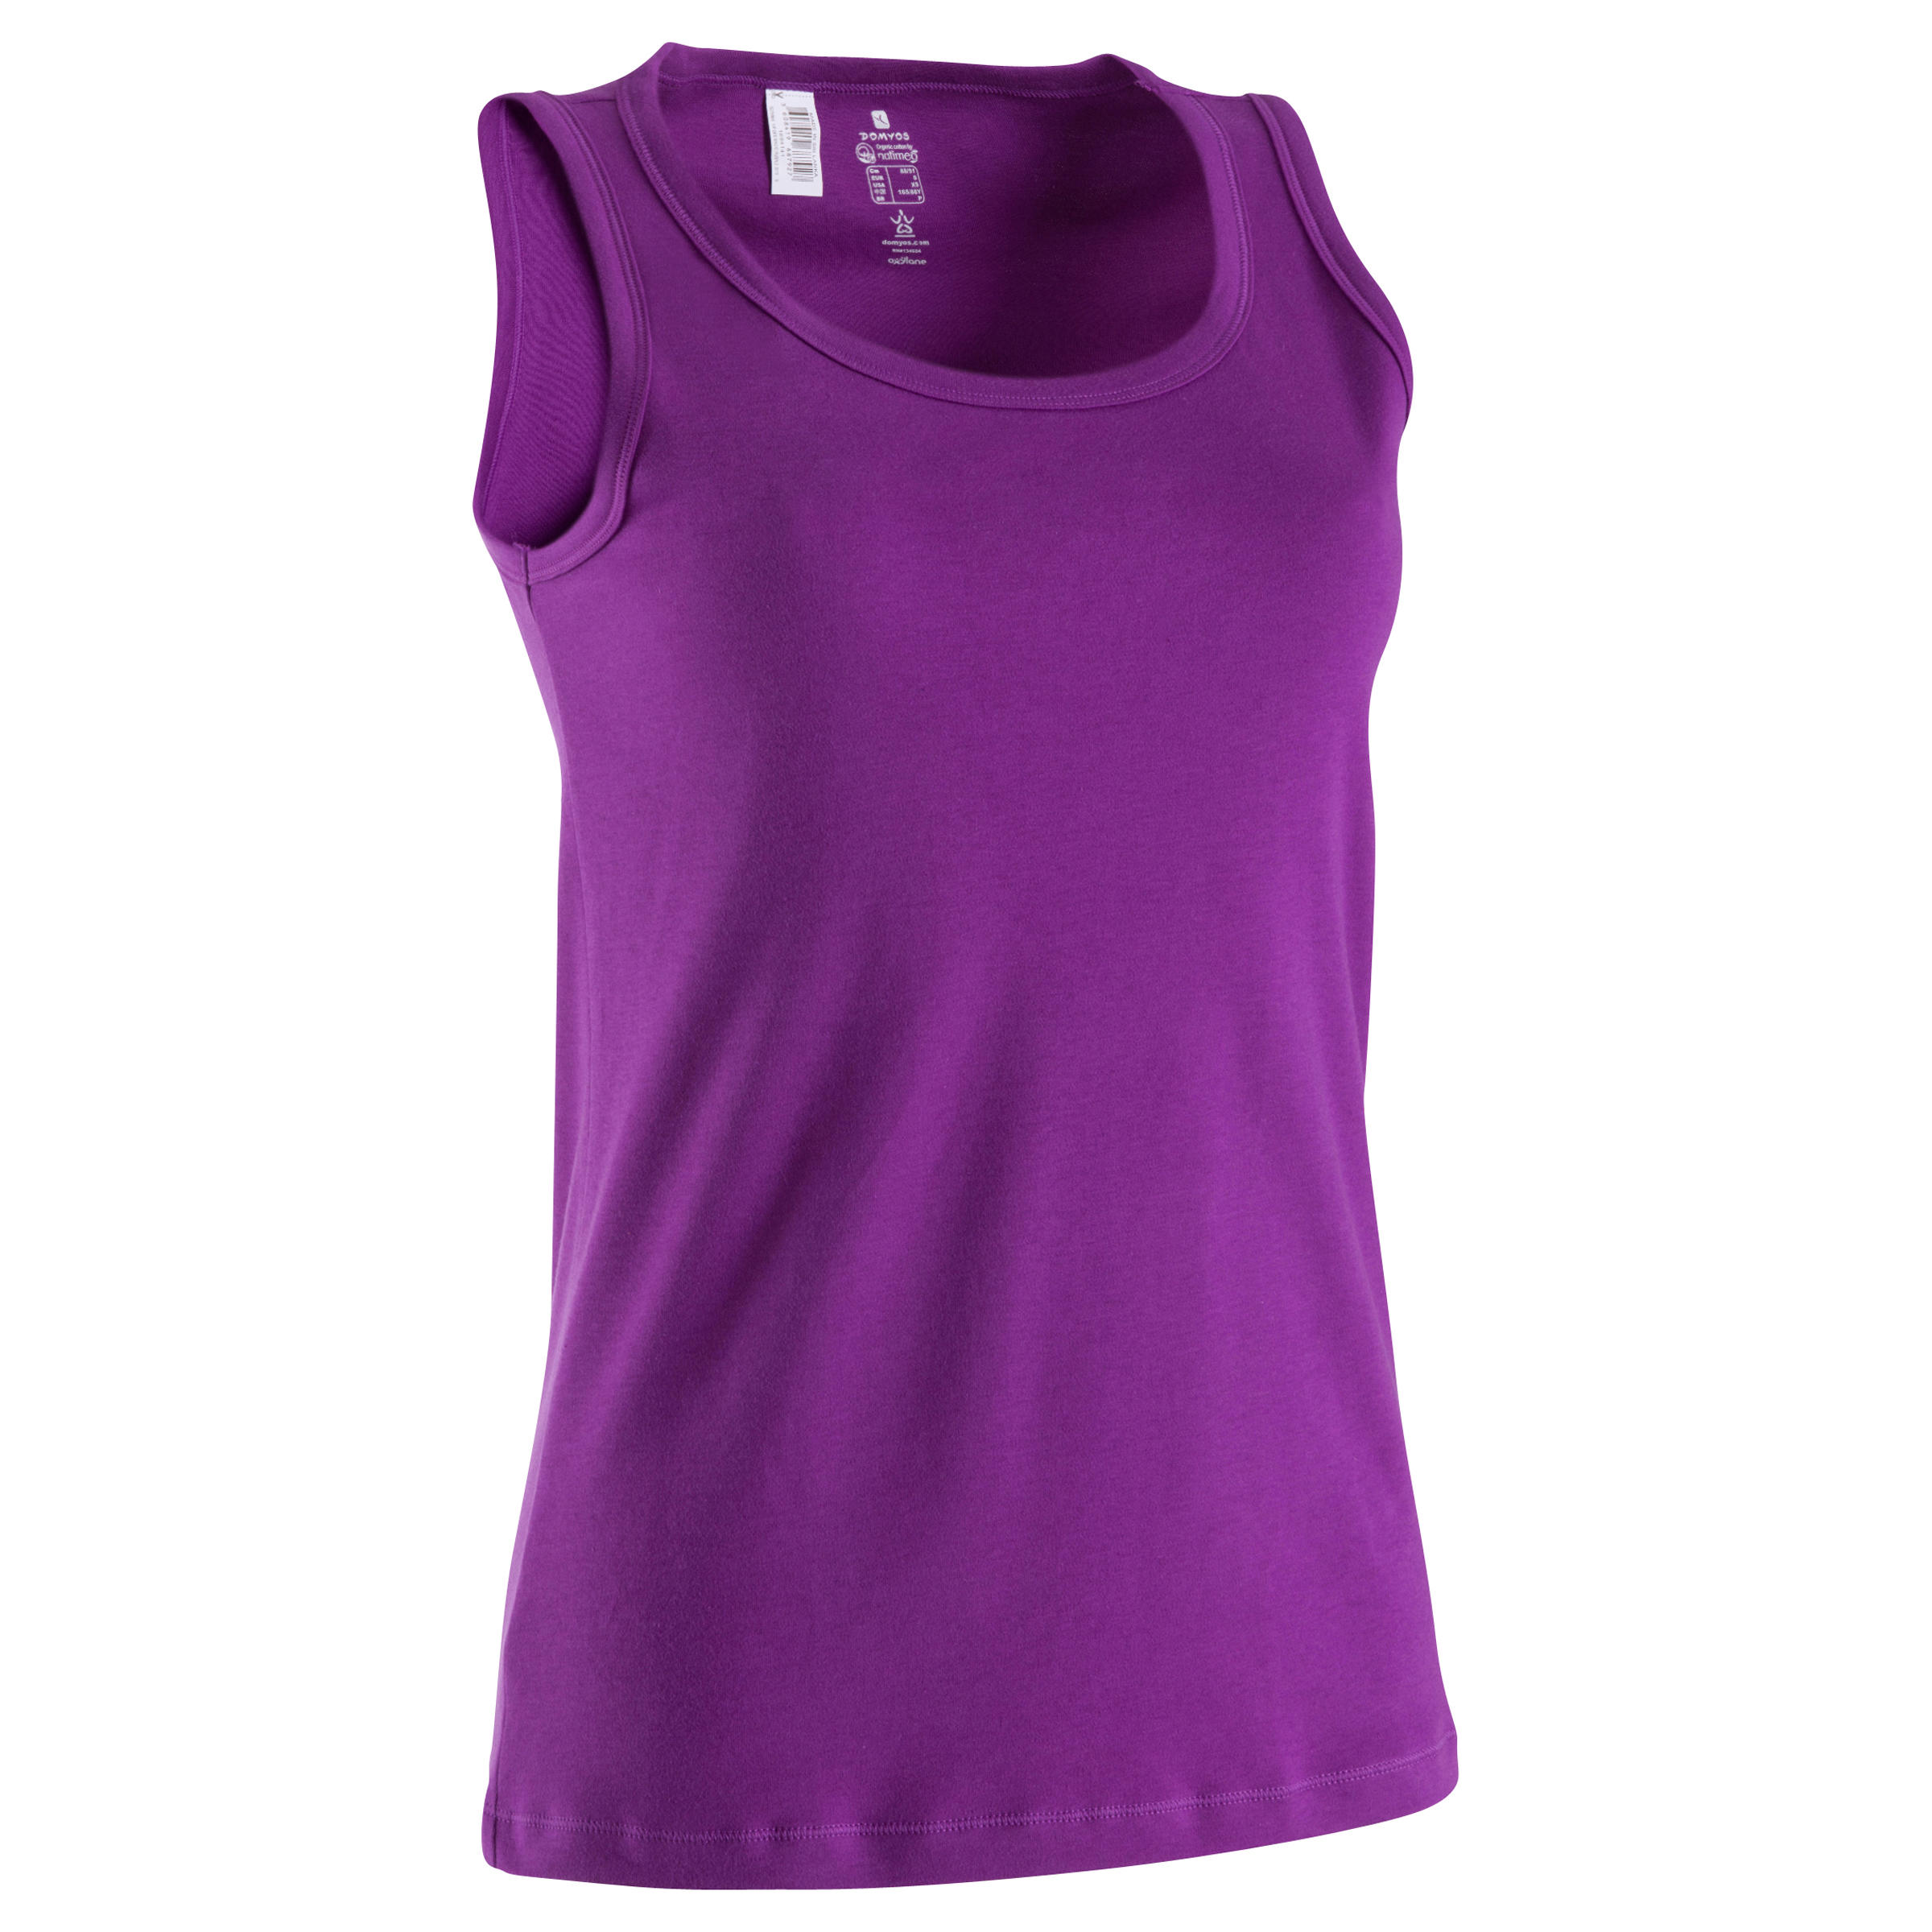 DOMYOS Women's organic cotton gentle gymnastics, yoga tank top - purple